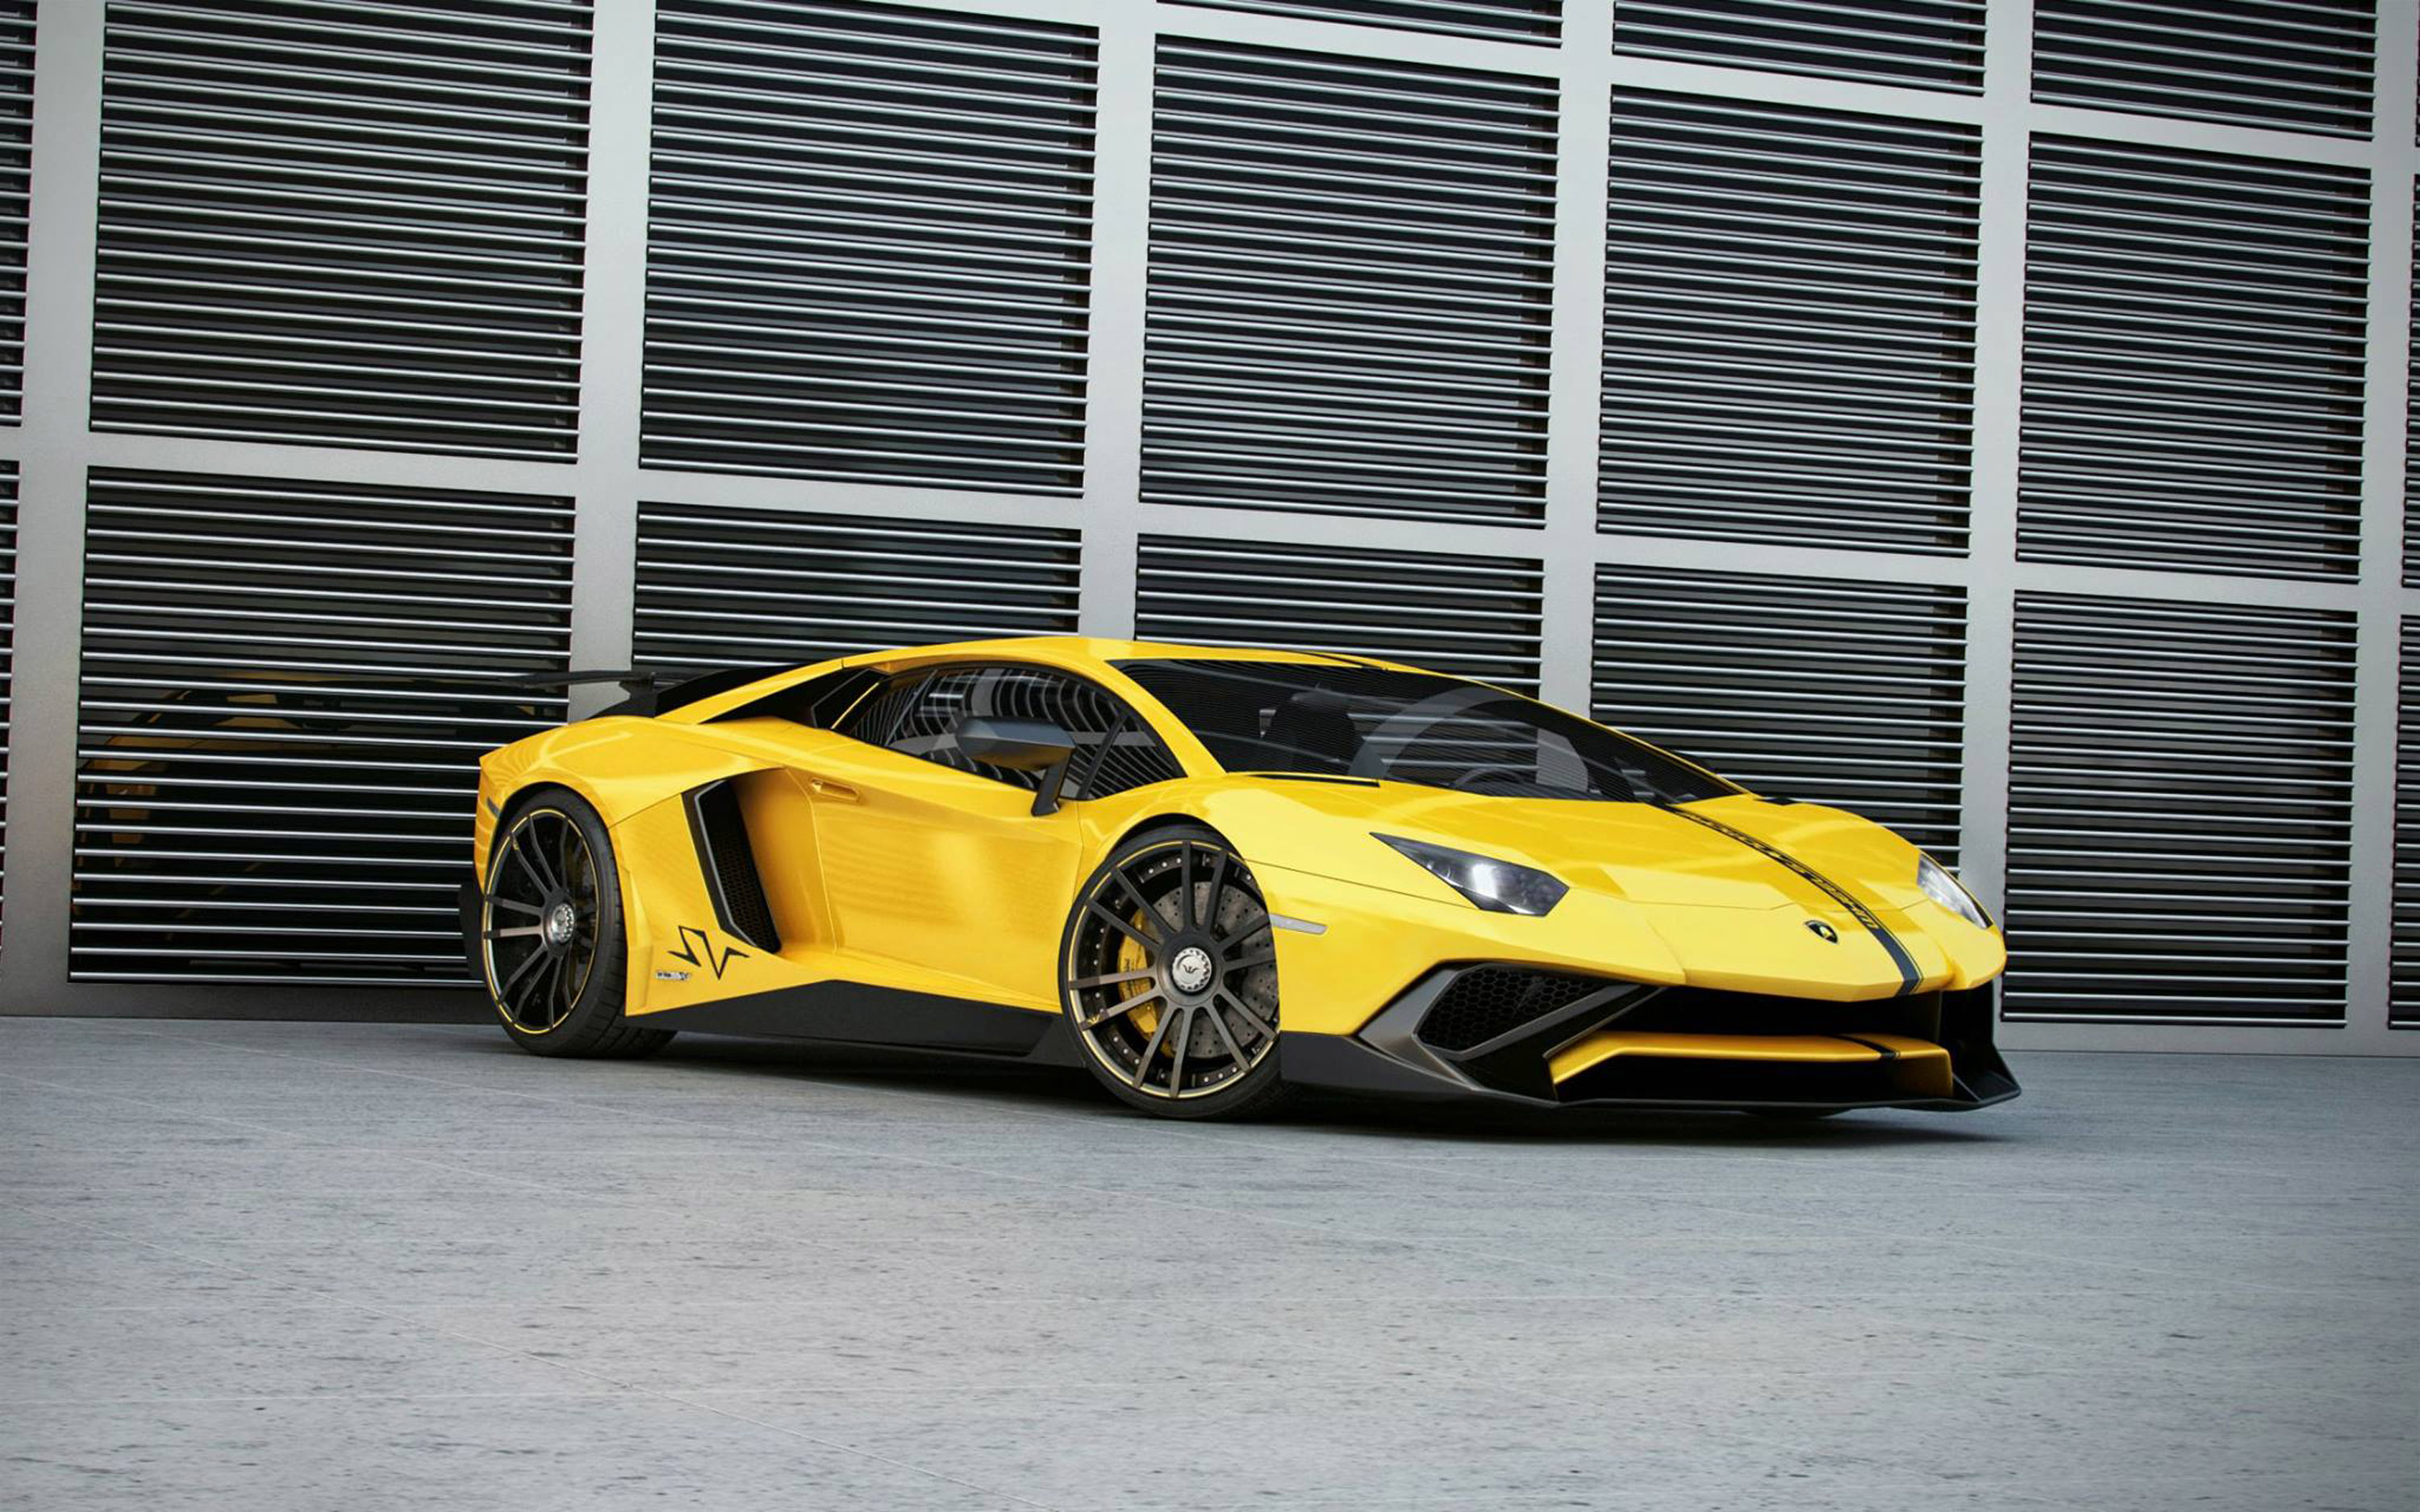 Wheelsandmore tunes Lamborghini Aventador